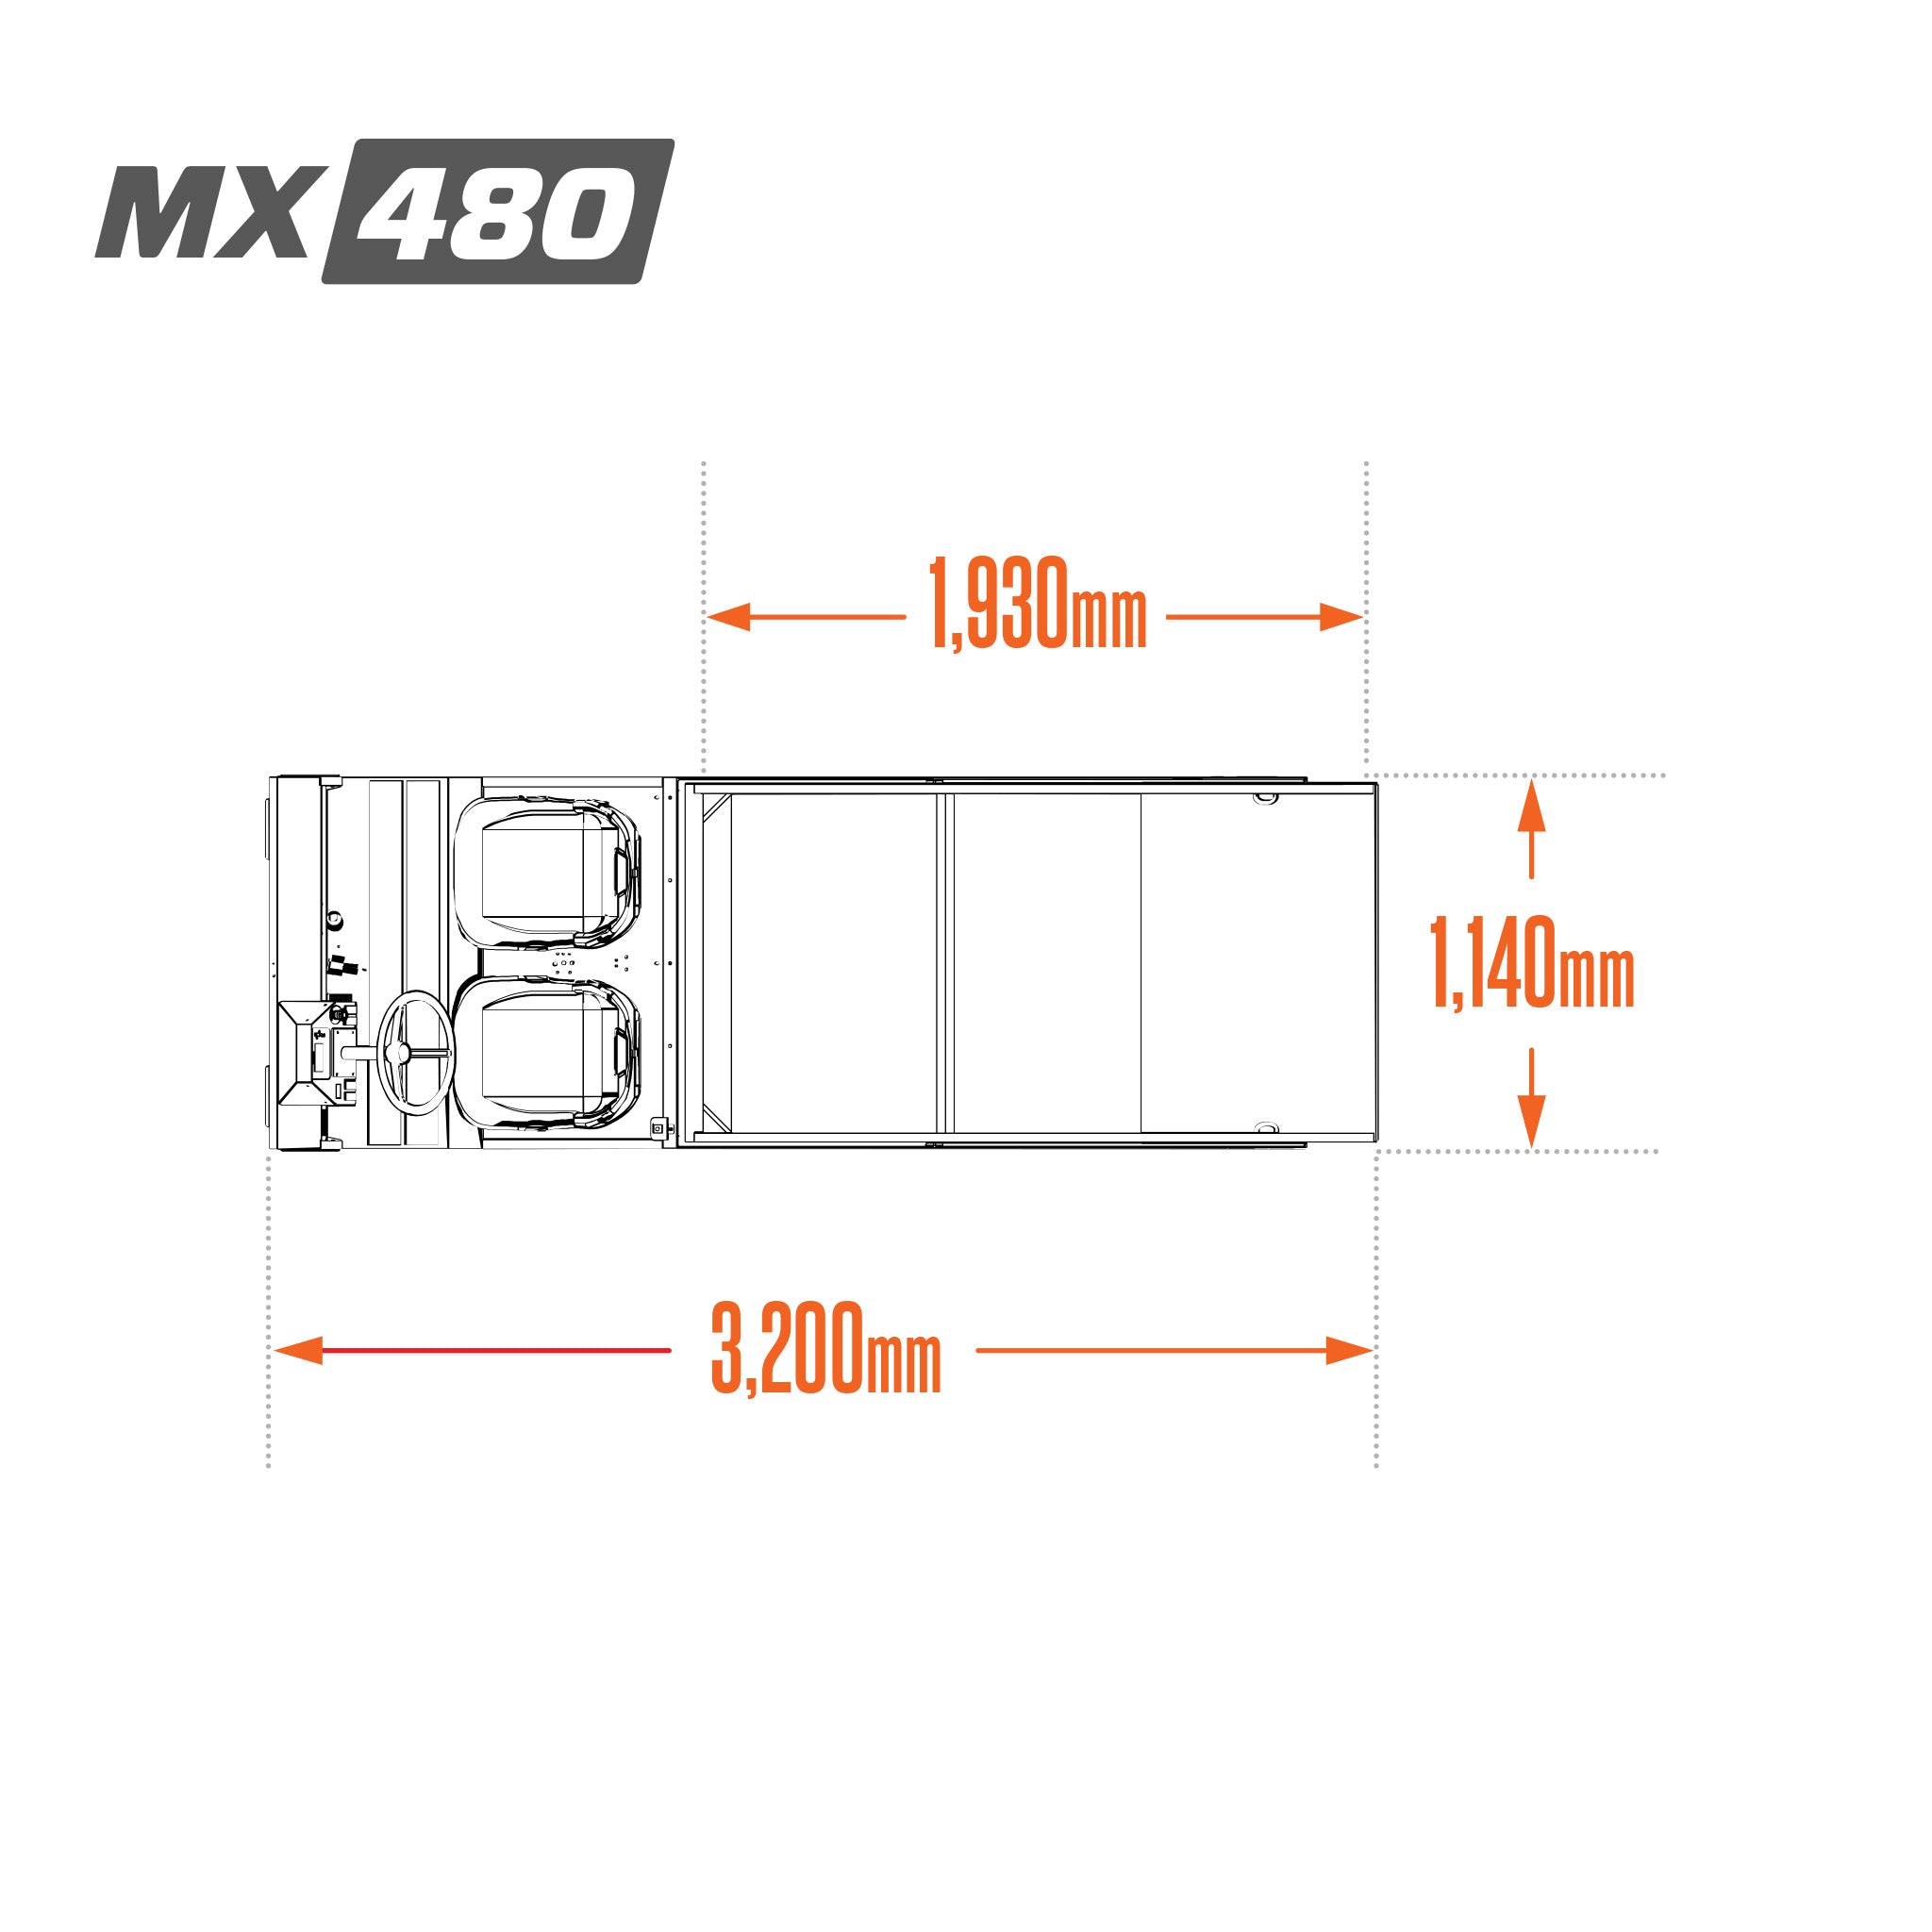 Motrec MX-480 Refuse Hauler Truck